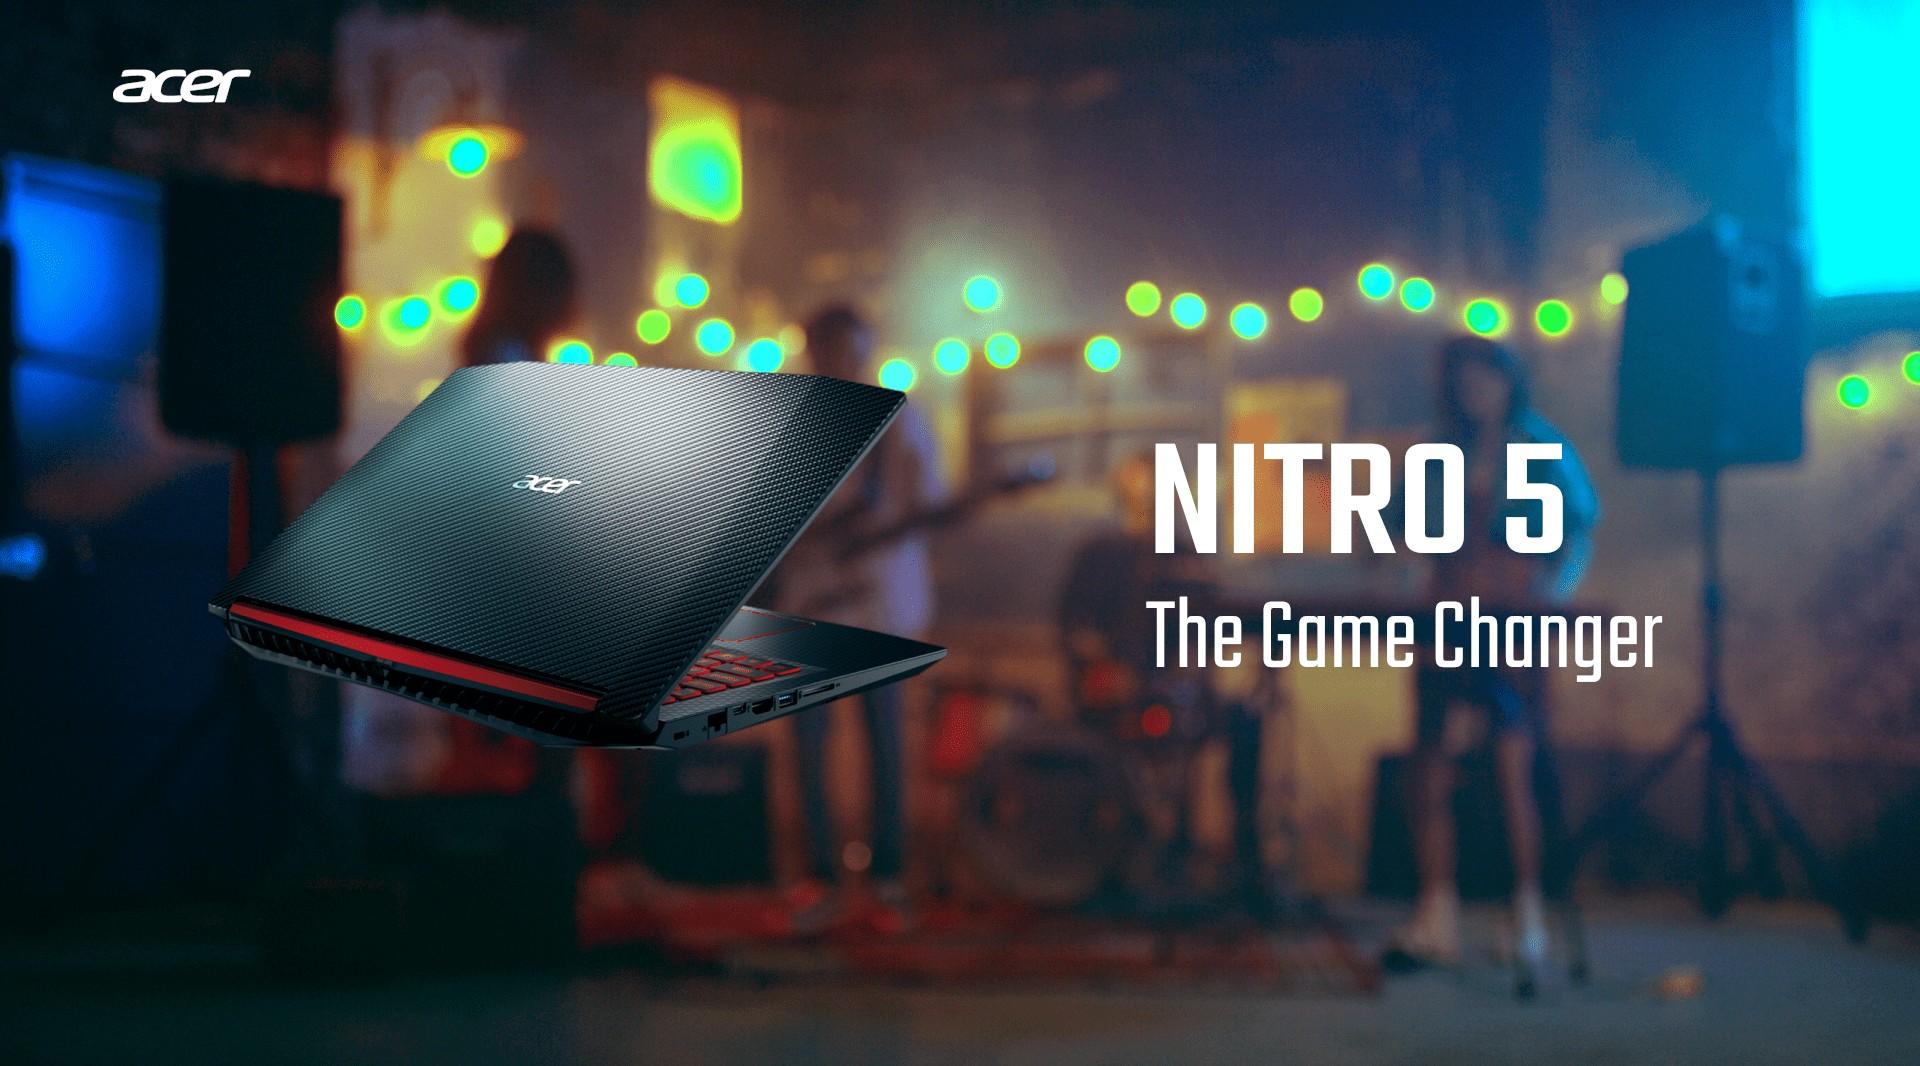 Acer Nitro 5 The Game Changer